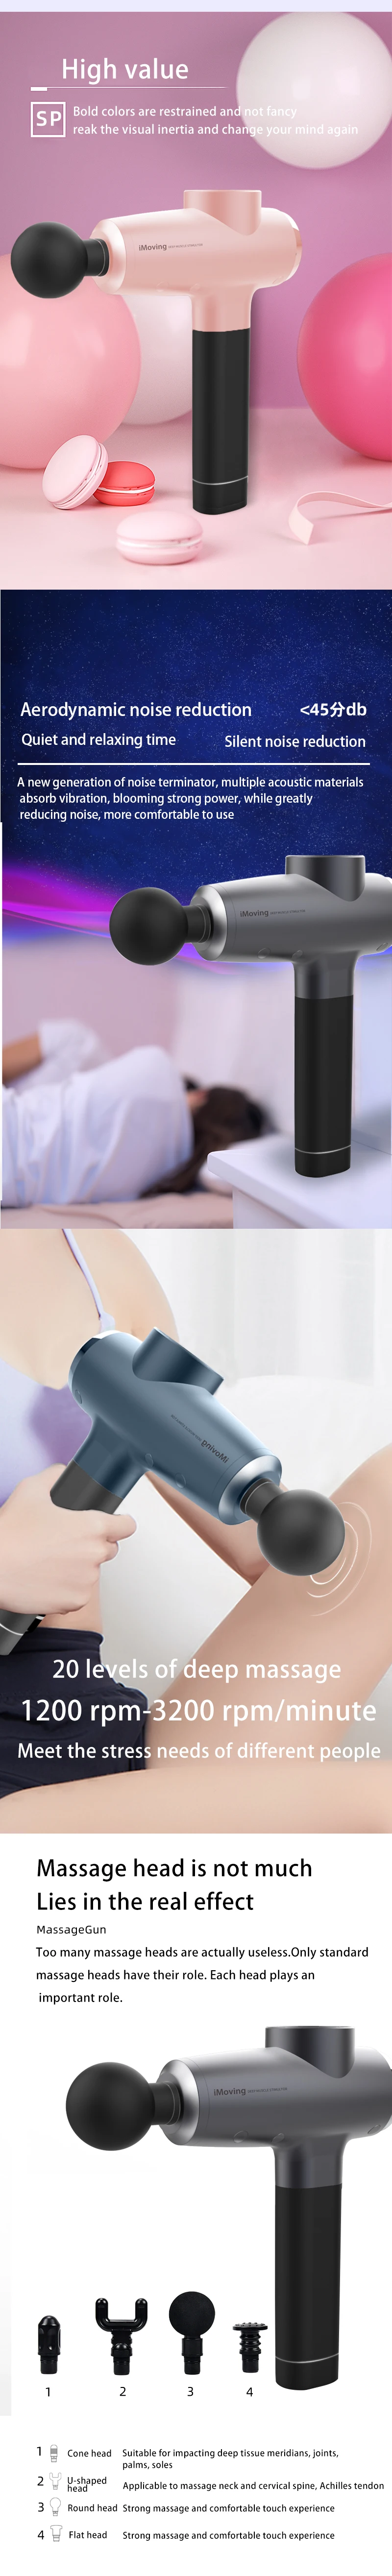 Personal Handheld Percussive Deep Tissue Device Massage Gun Provides Full Body Relief